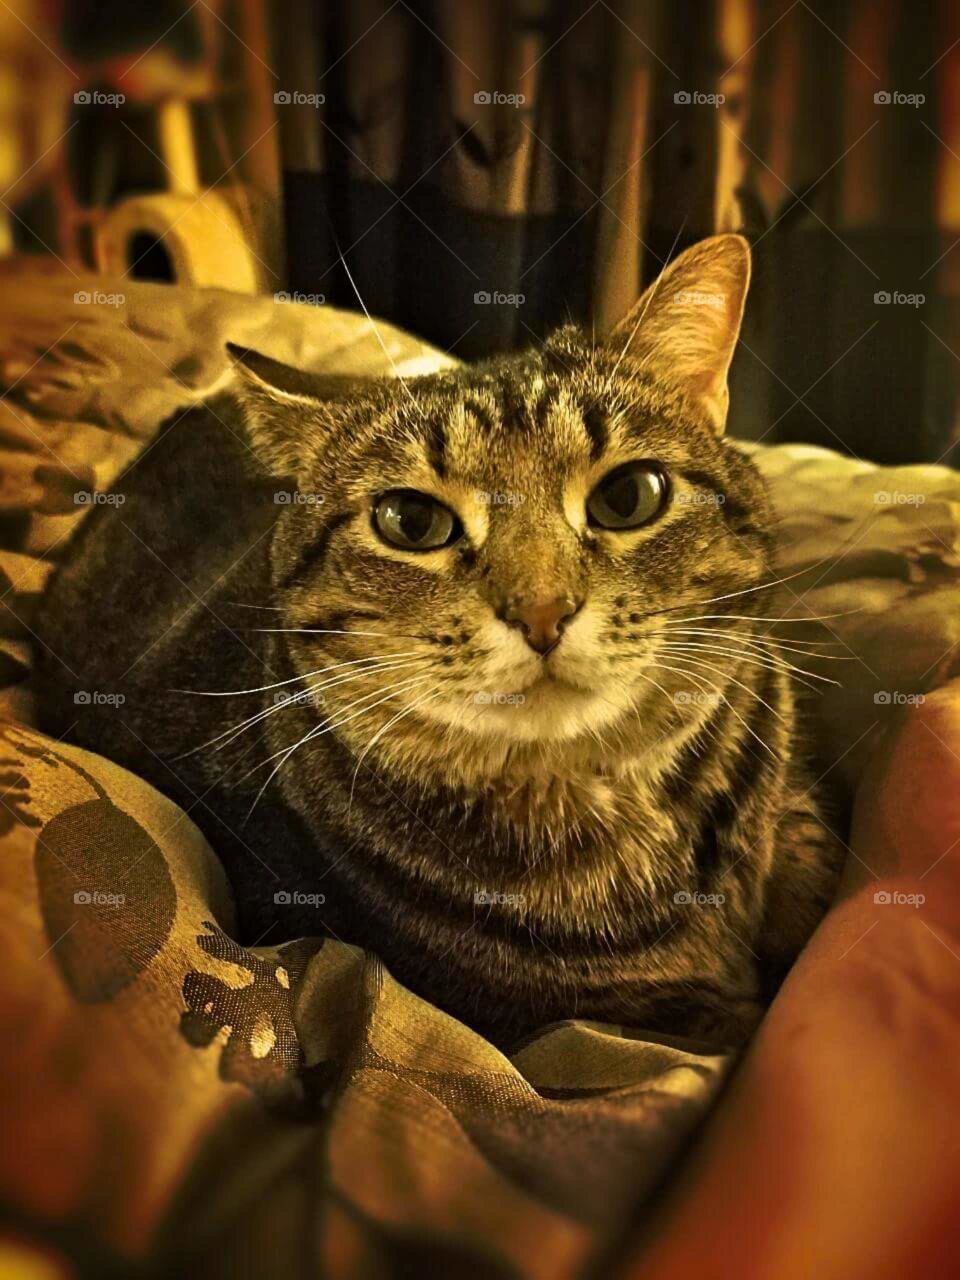 Kitty's portrait